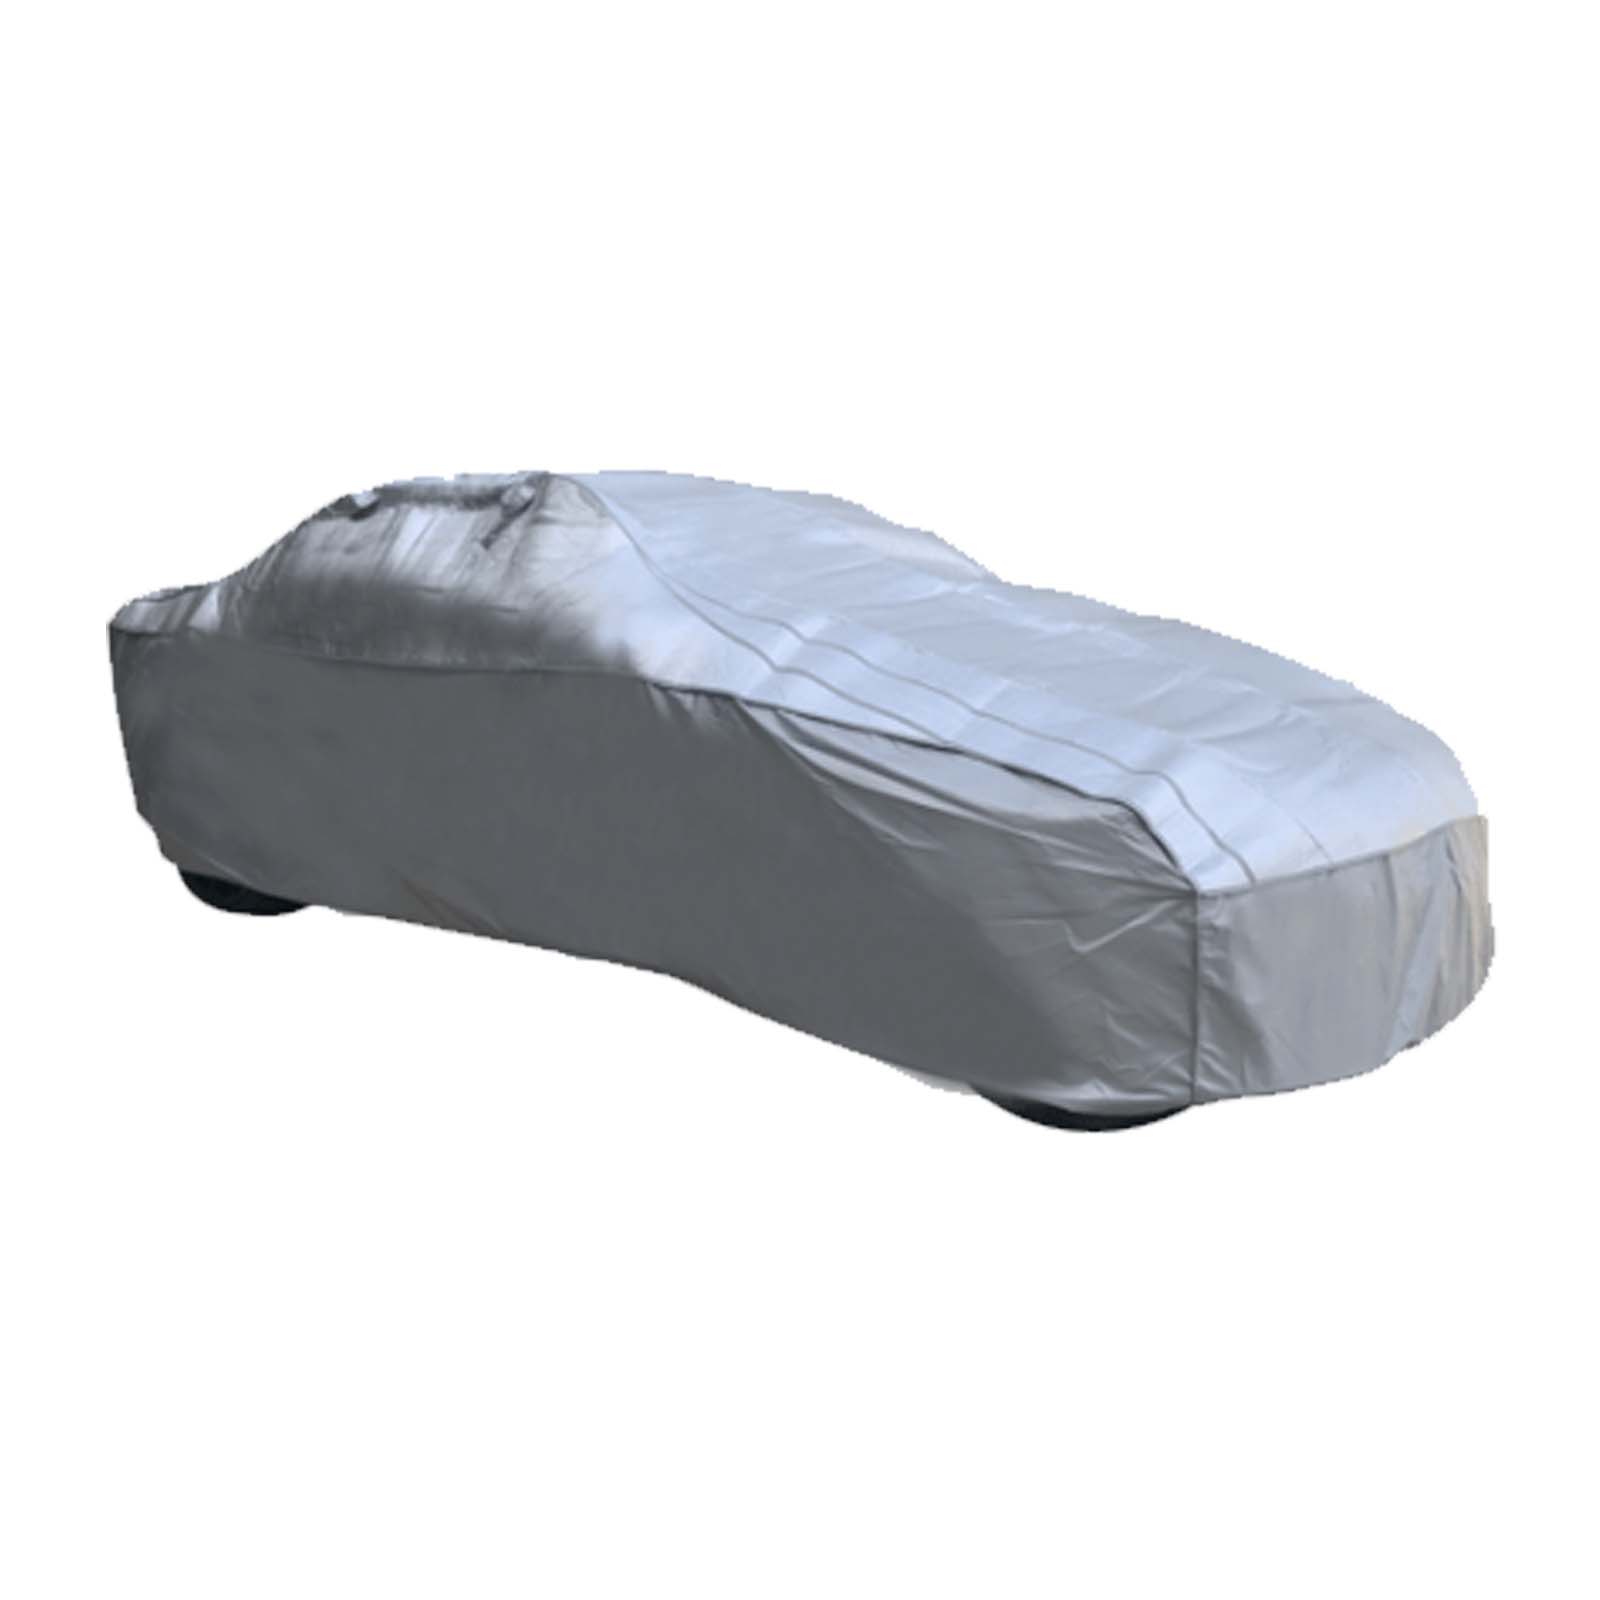 Autotecnica Car Cover Stormguard Waterproof fits Audi A3 S3 RS3 8V